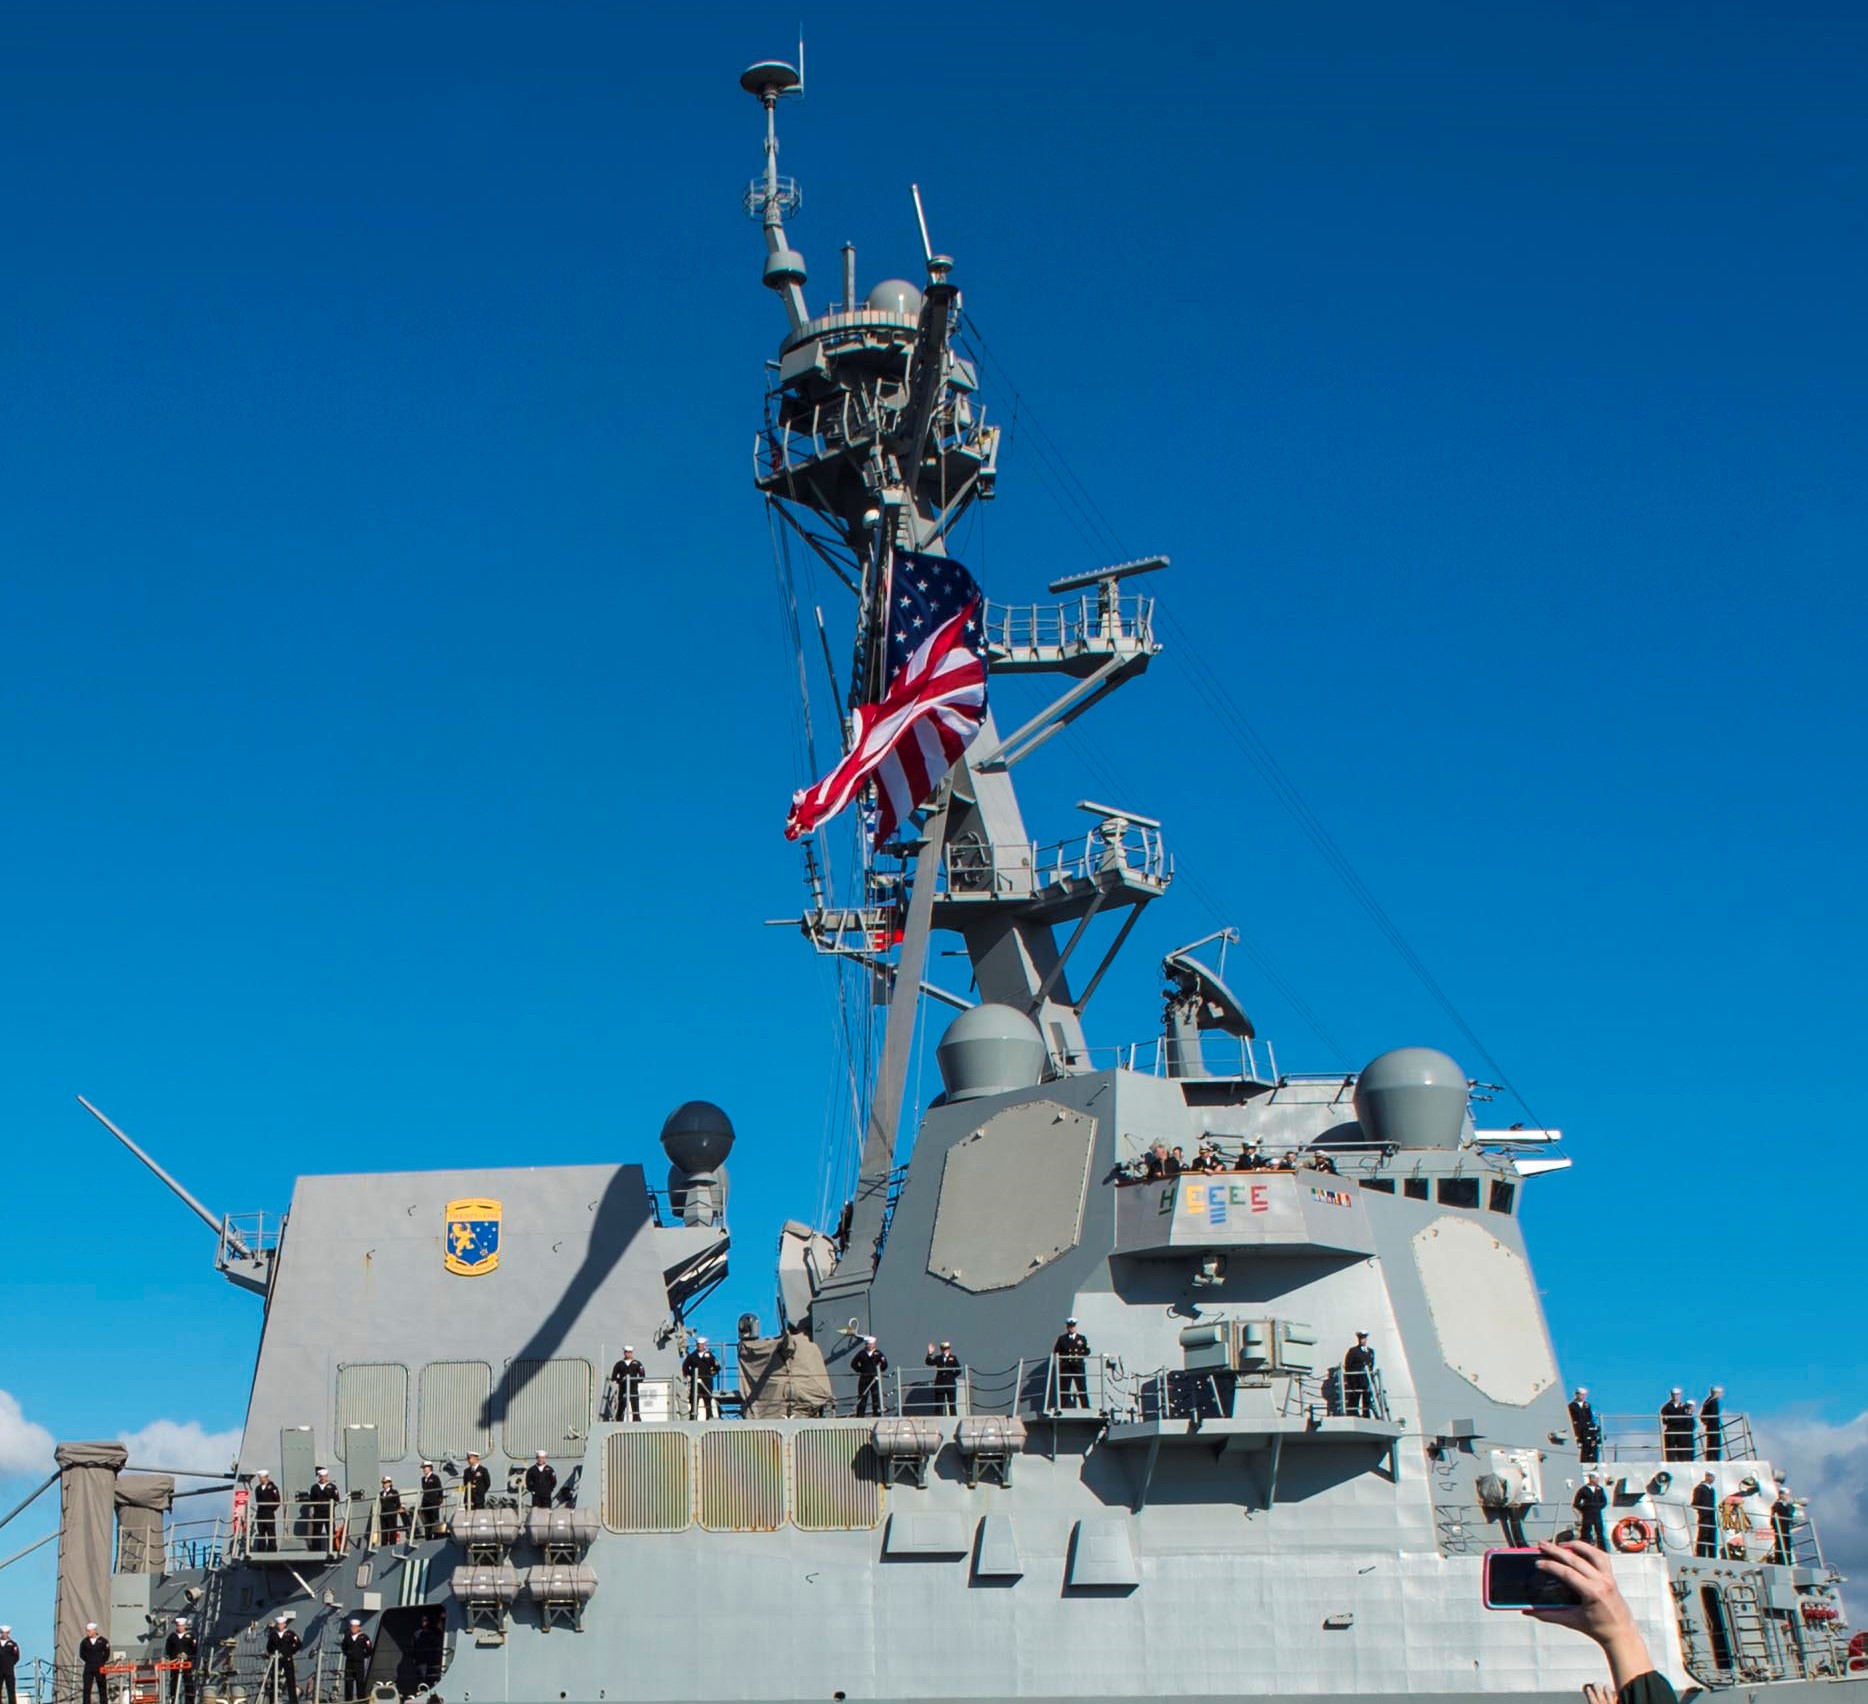 ddg-106 uss stockdale arleigh burke class guided missile destroyer aegis us navy naval base san diego california 19